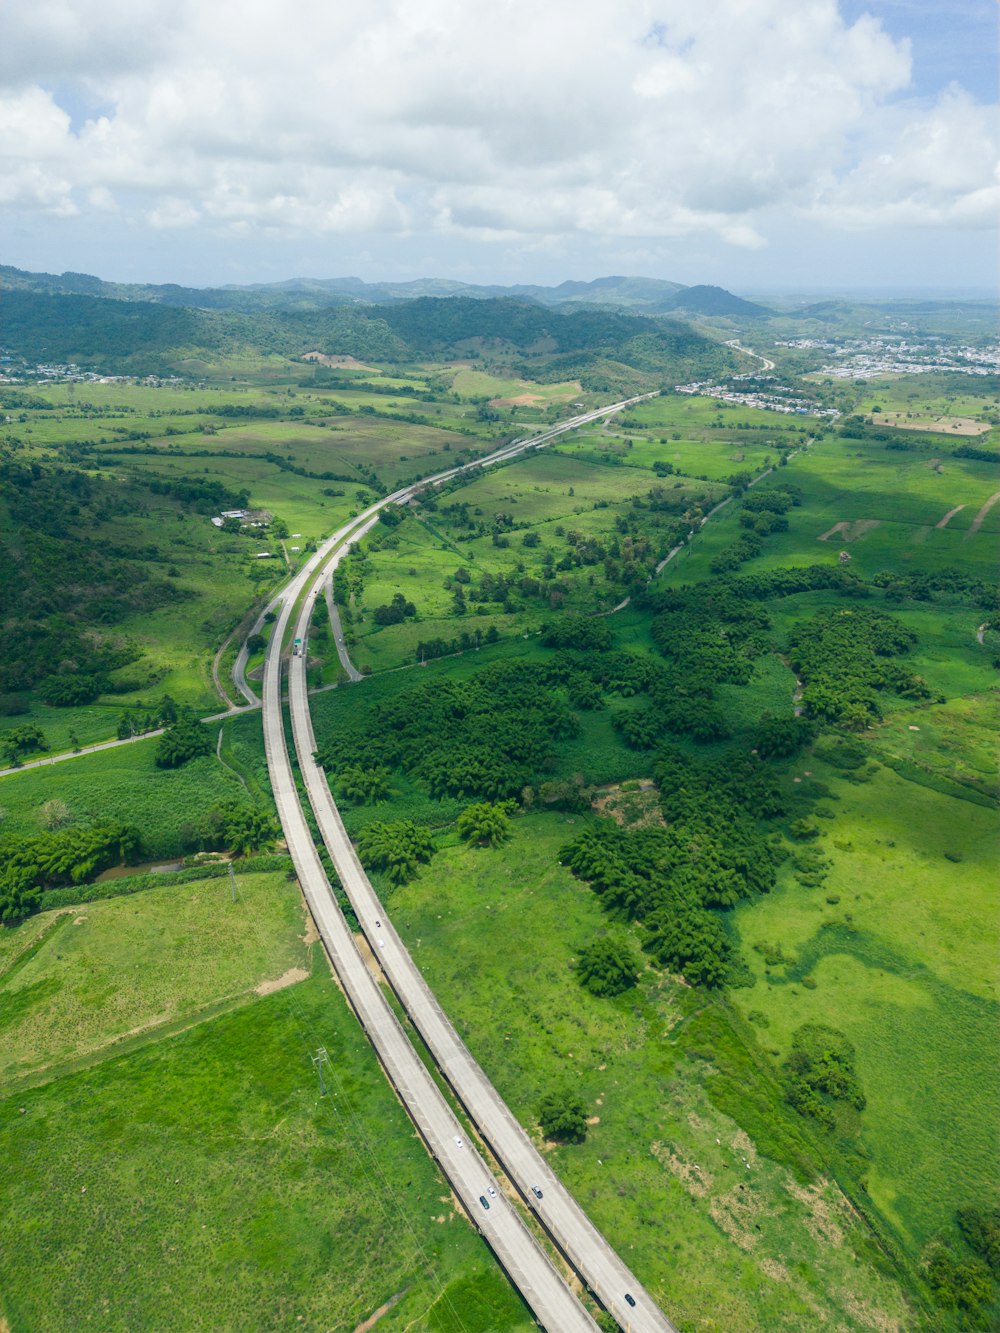 una veduta aerea di un'autostrada nel paese